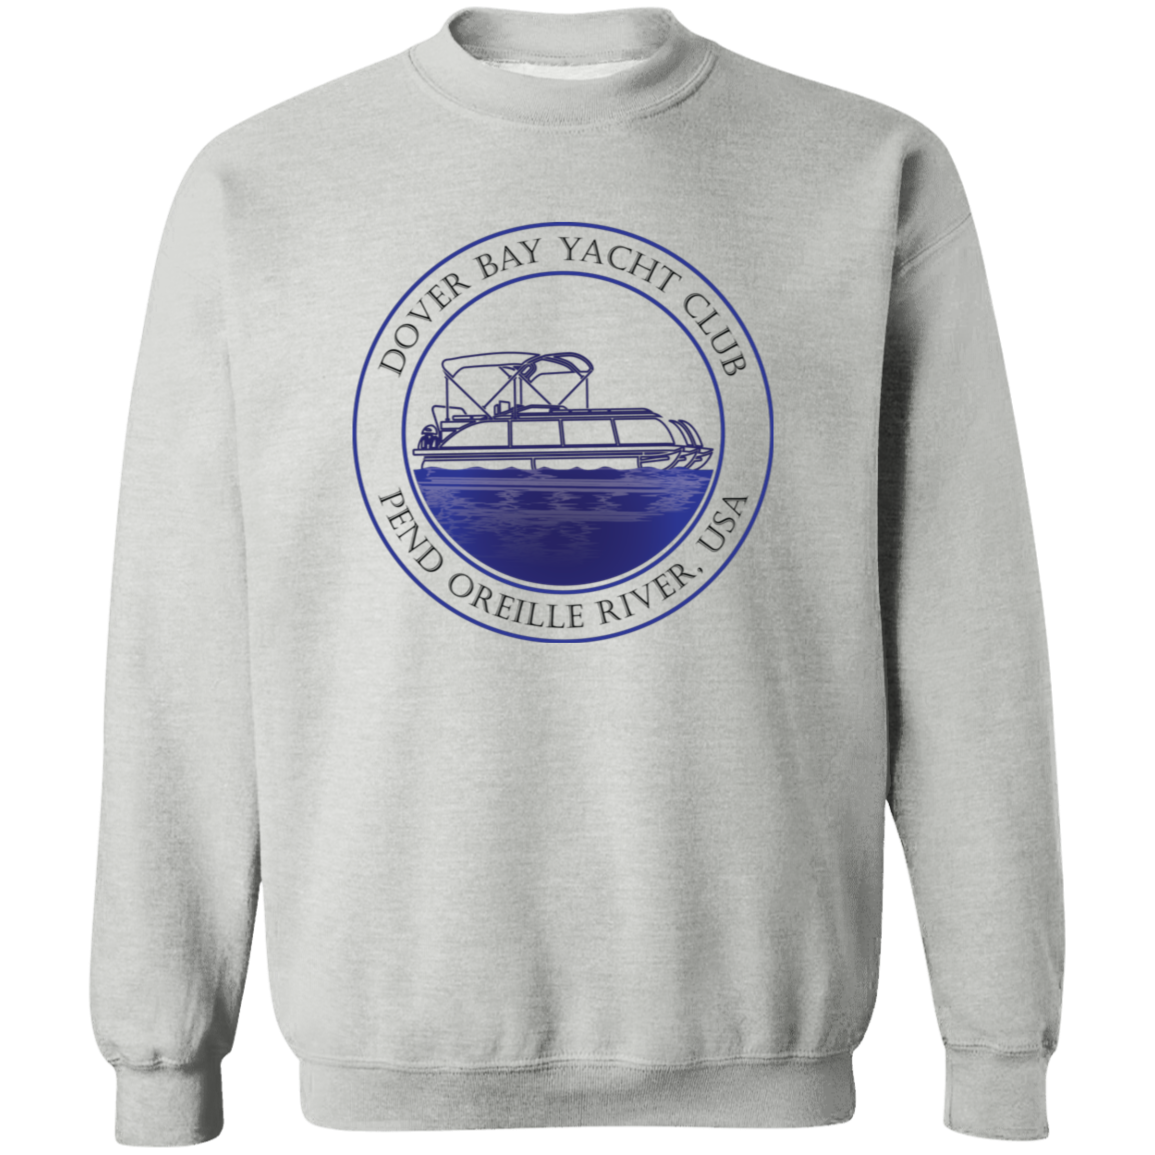 Dover Bay Yacht Club - Sweatshirt